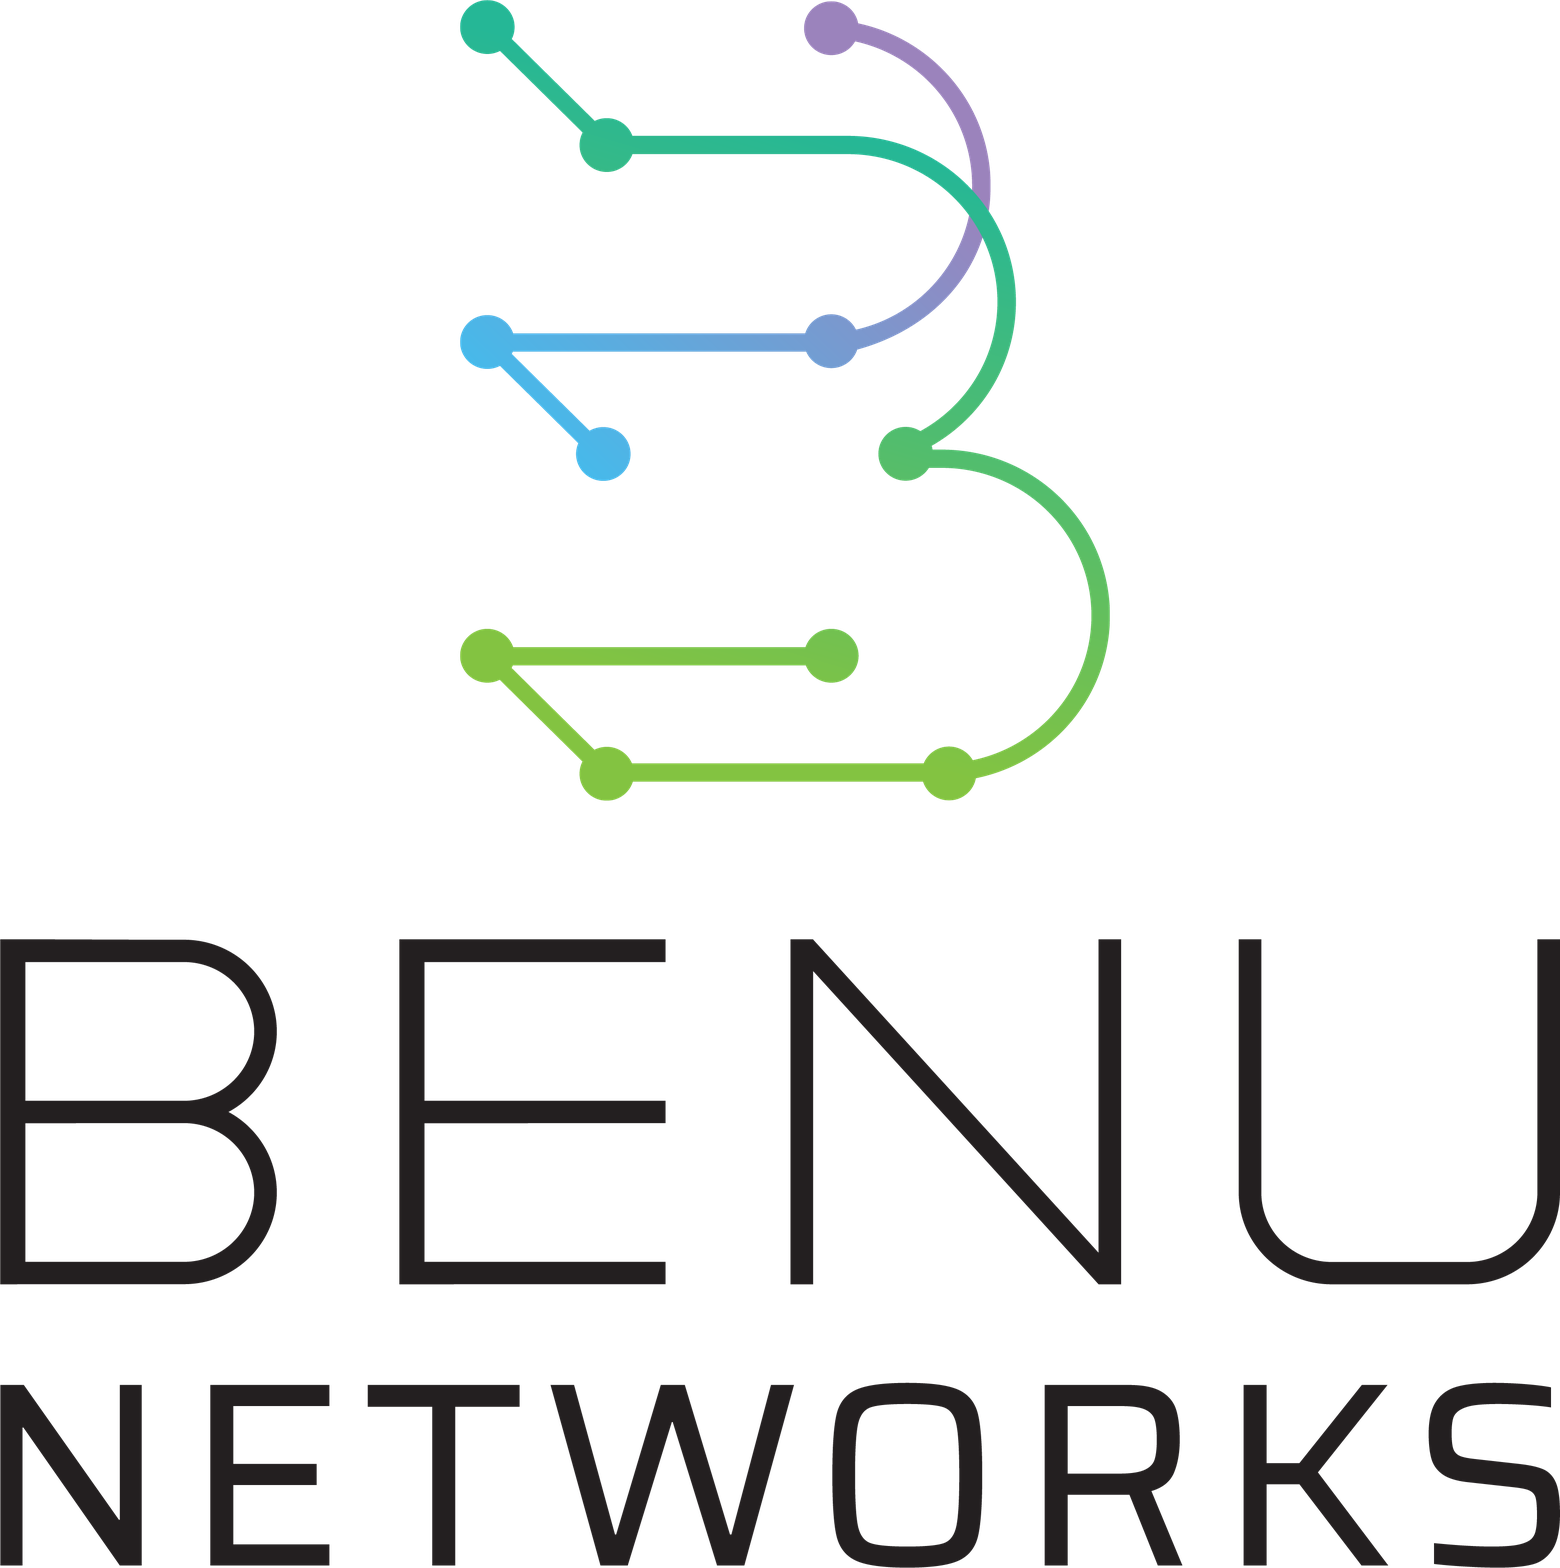 Benu Networks, Inc.